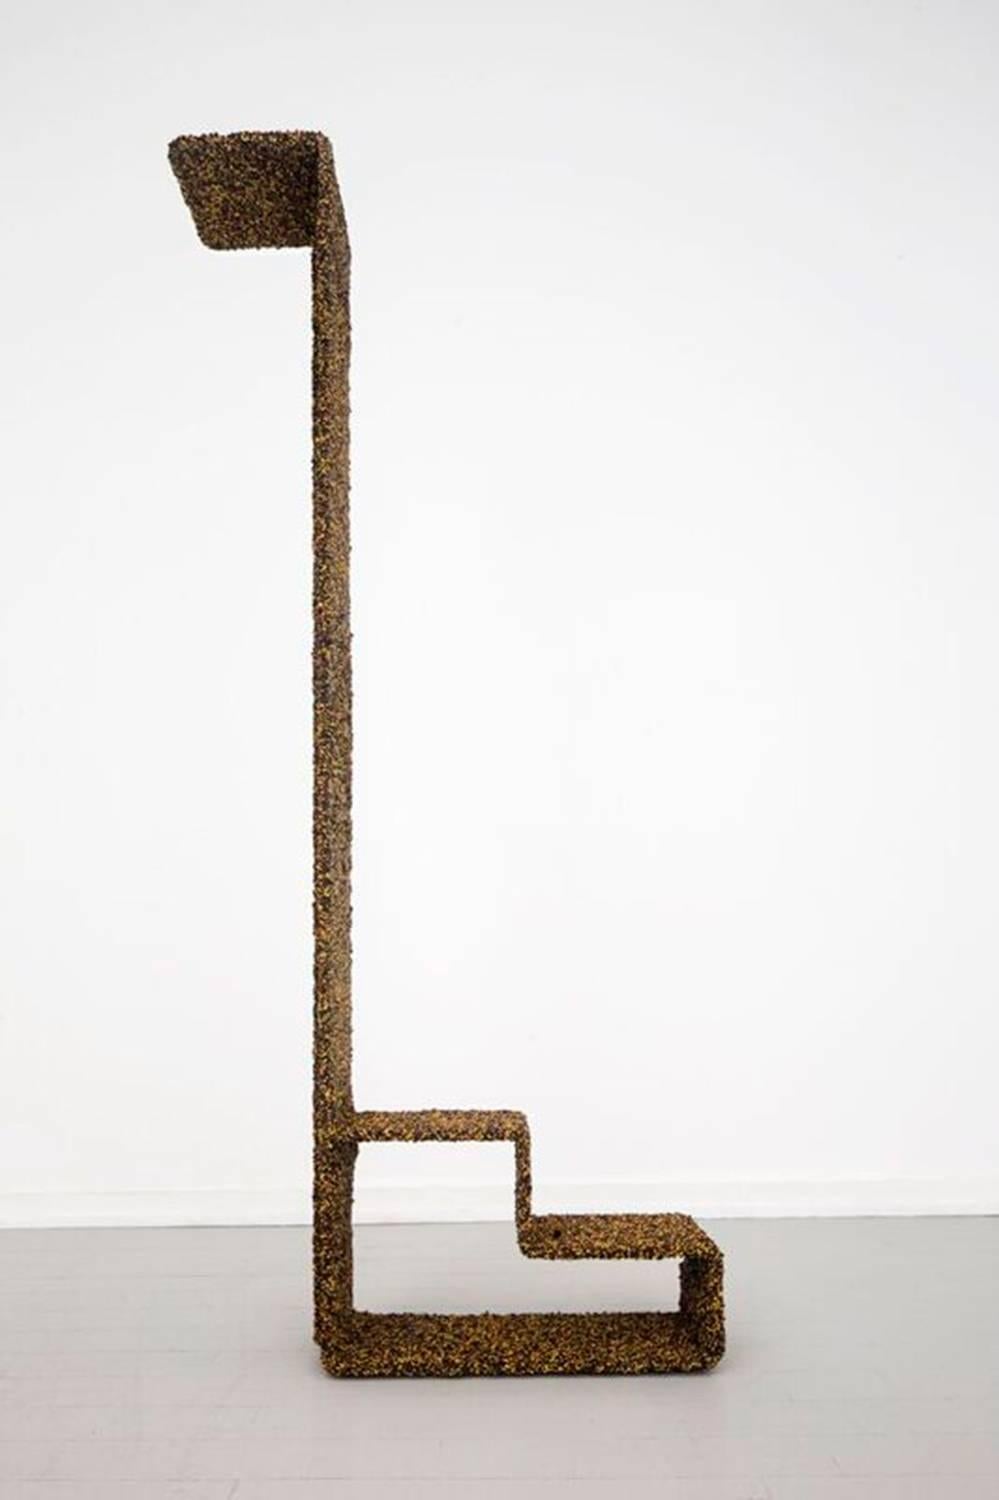 Kueng Caputo's interpretation of a plinth, for the exhibition 